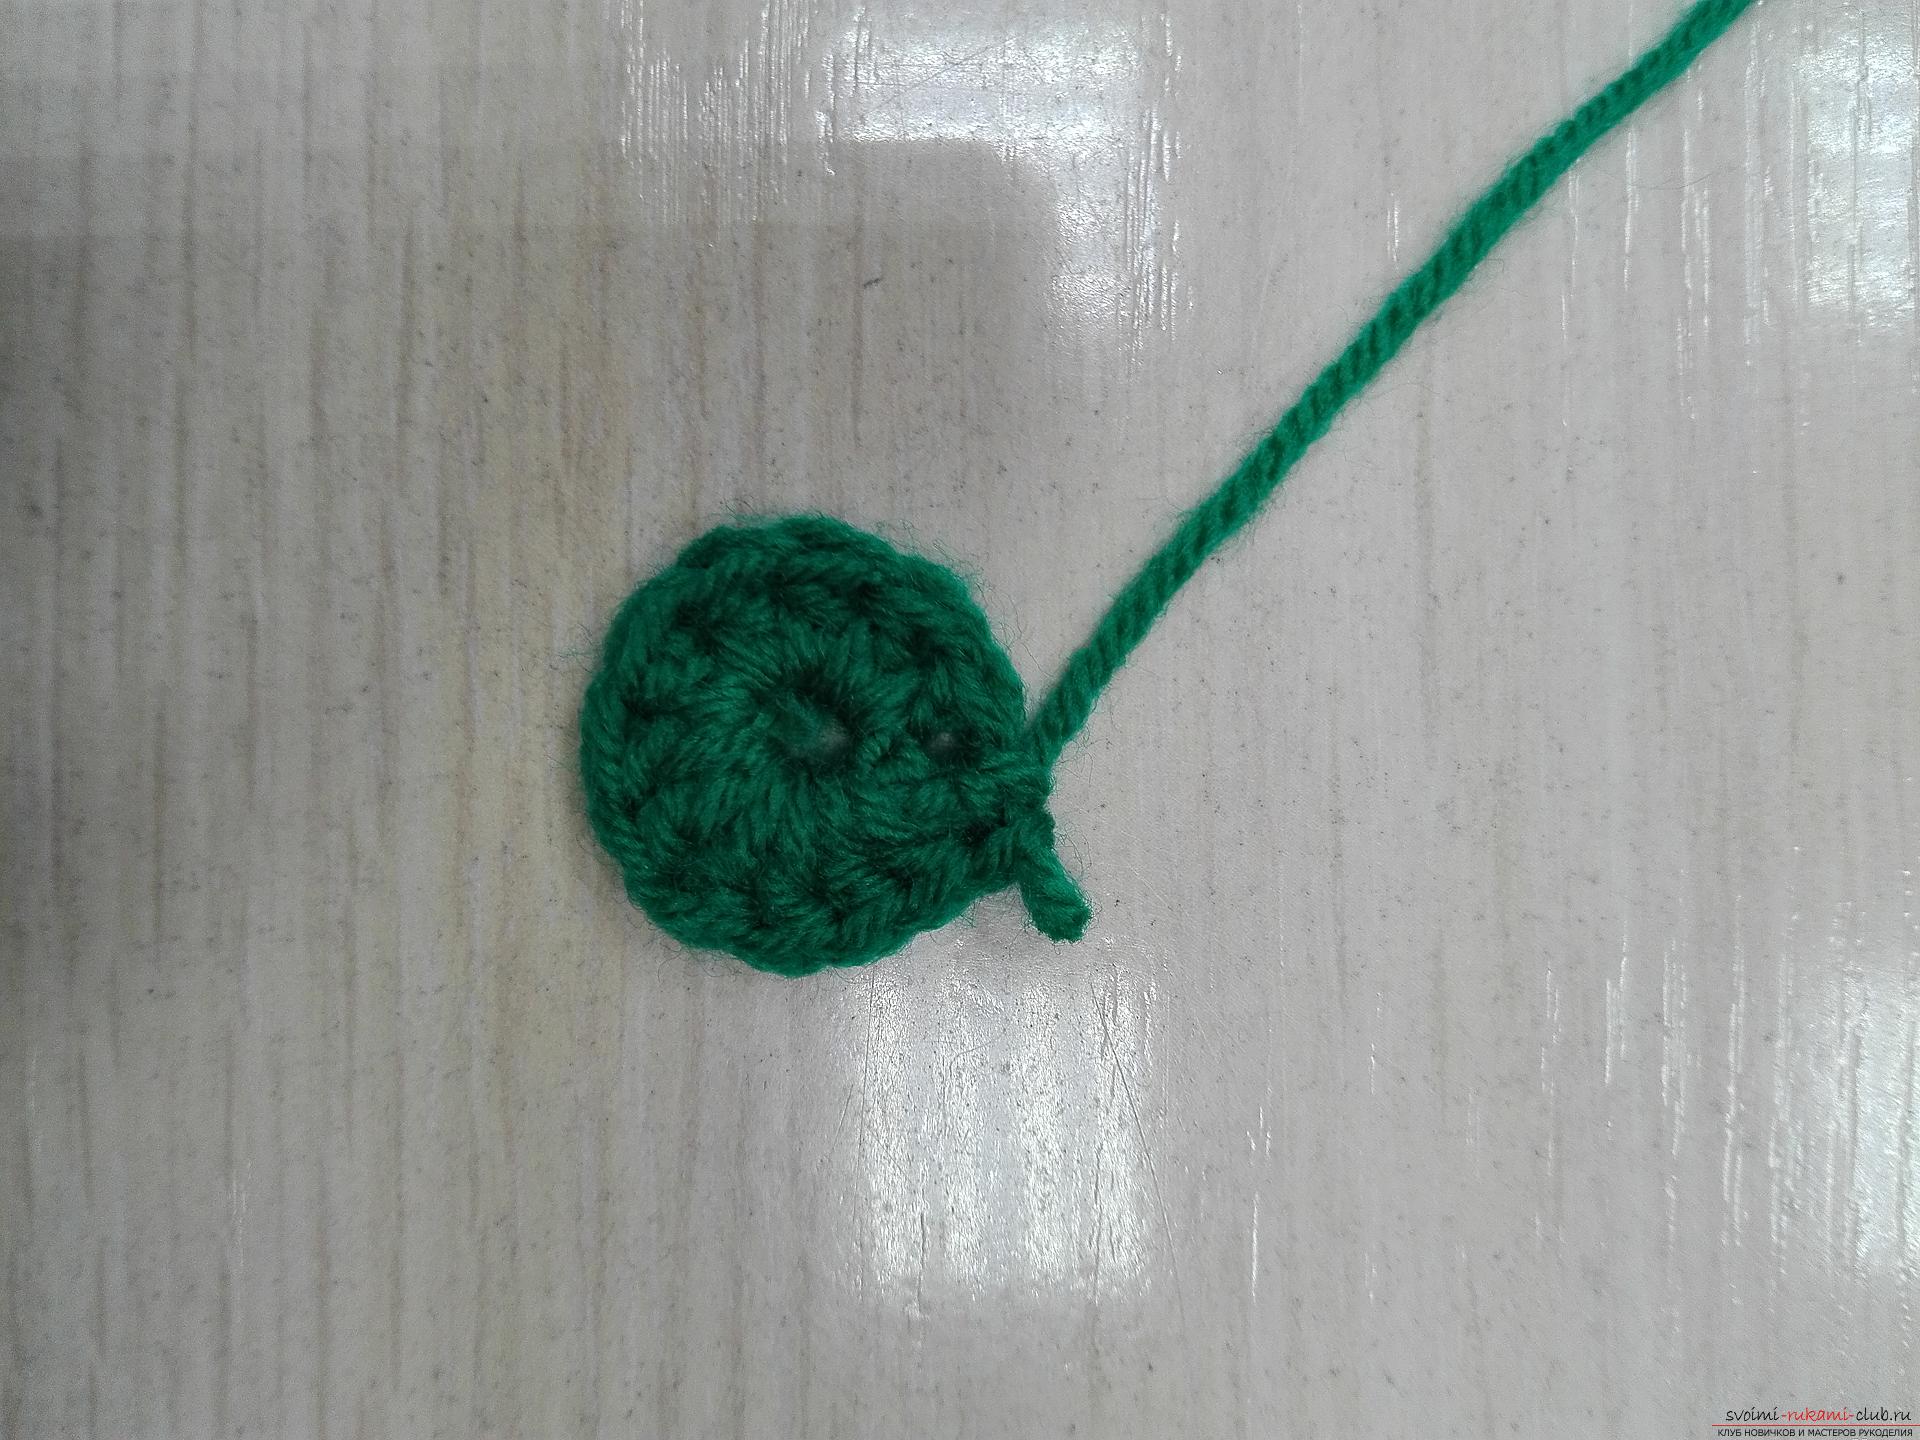 A master class with detailed photos and descriptions will teach crochet crochet needle crochet. Photo # 2